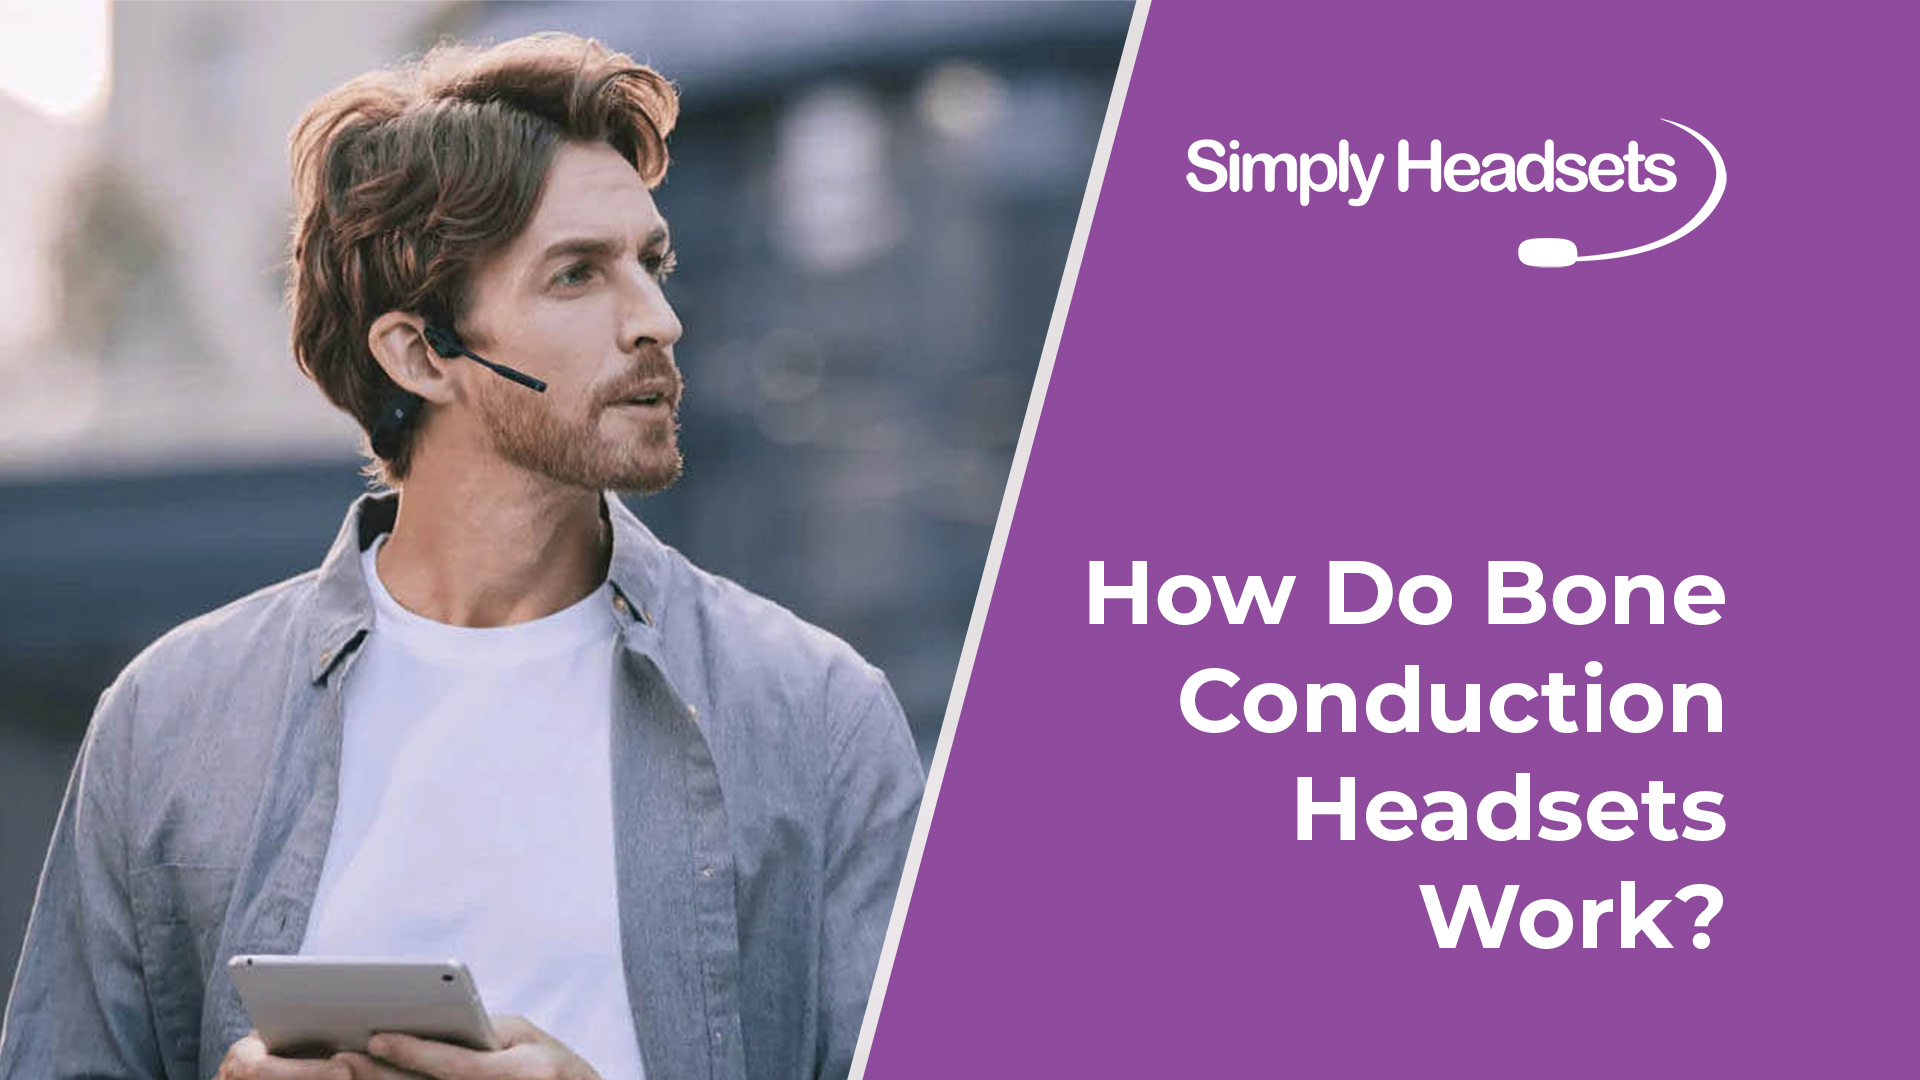 How Do Bone Conduction Headsets Work?